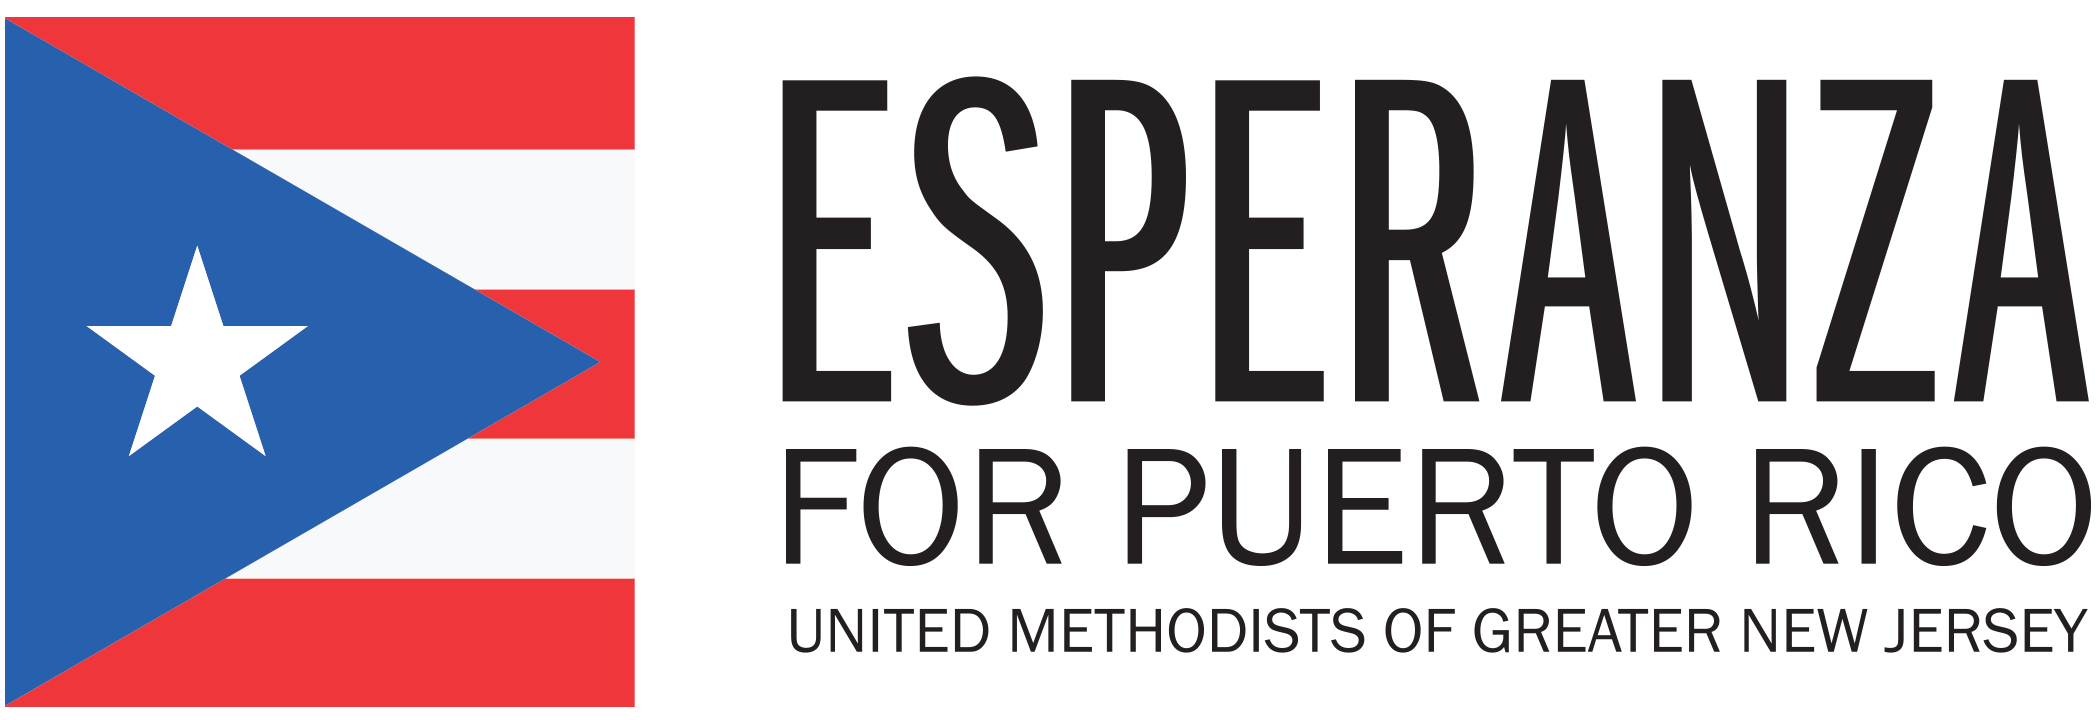 Esperanza Logo - Esperanza logo. United Methodist Church of Greater New Jersey